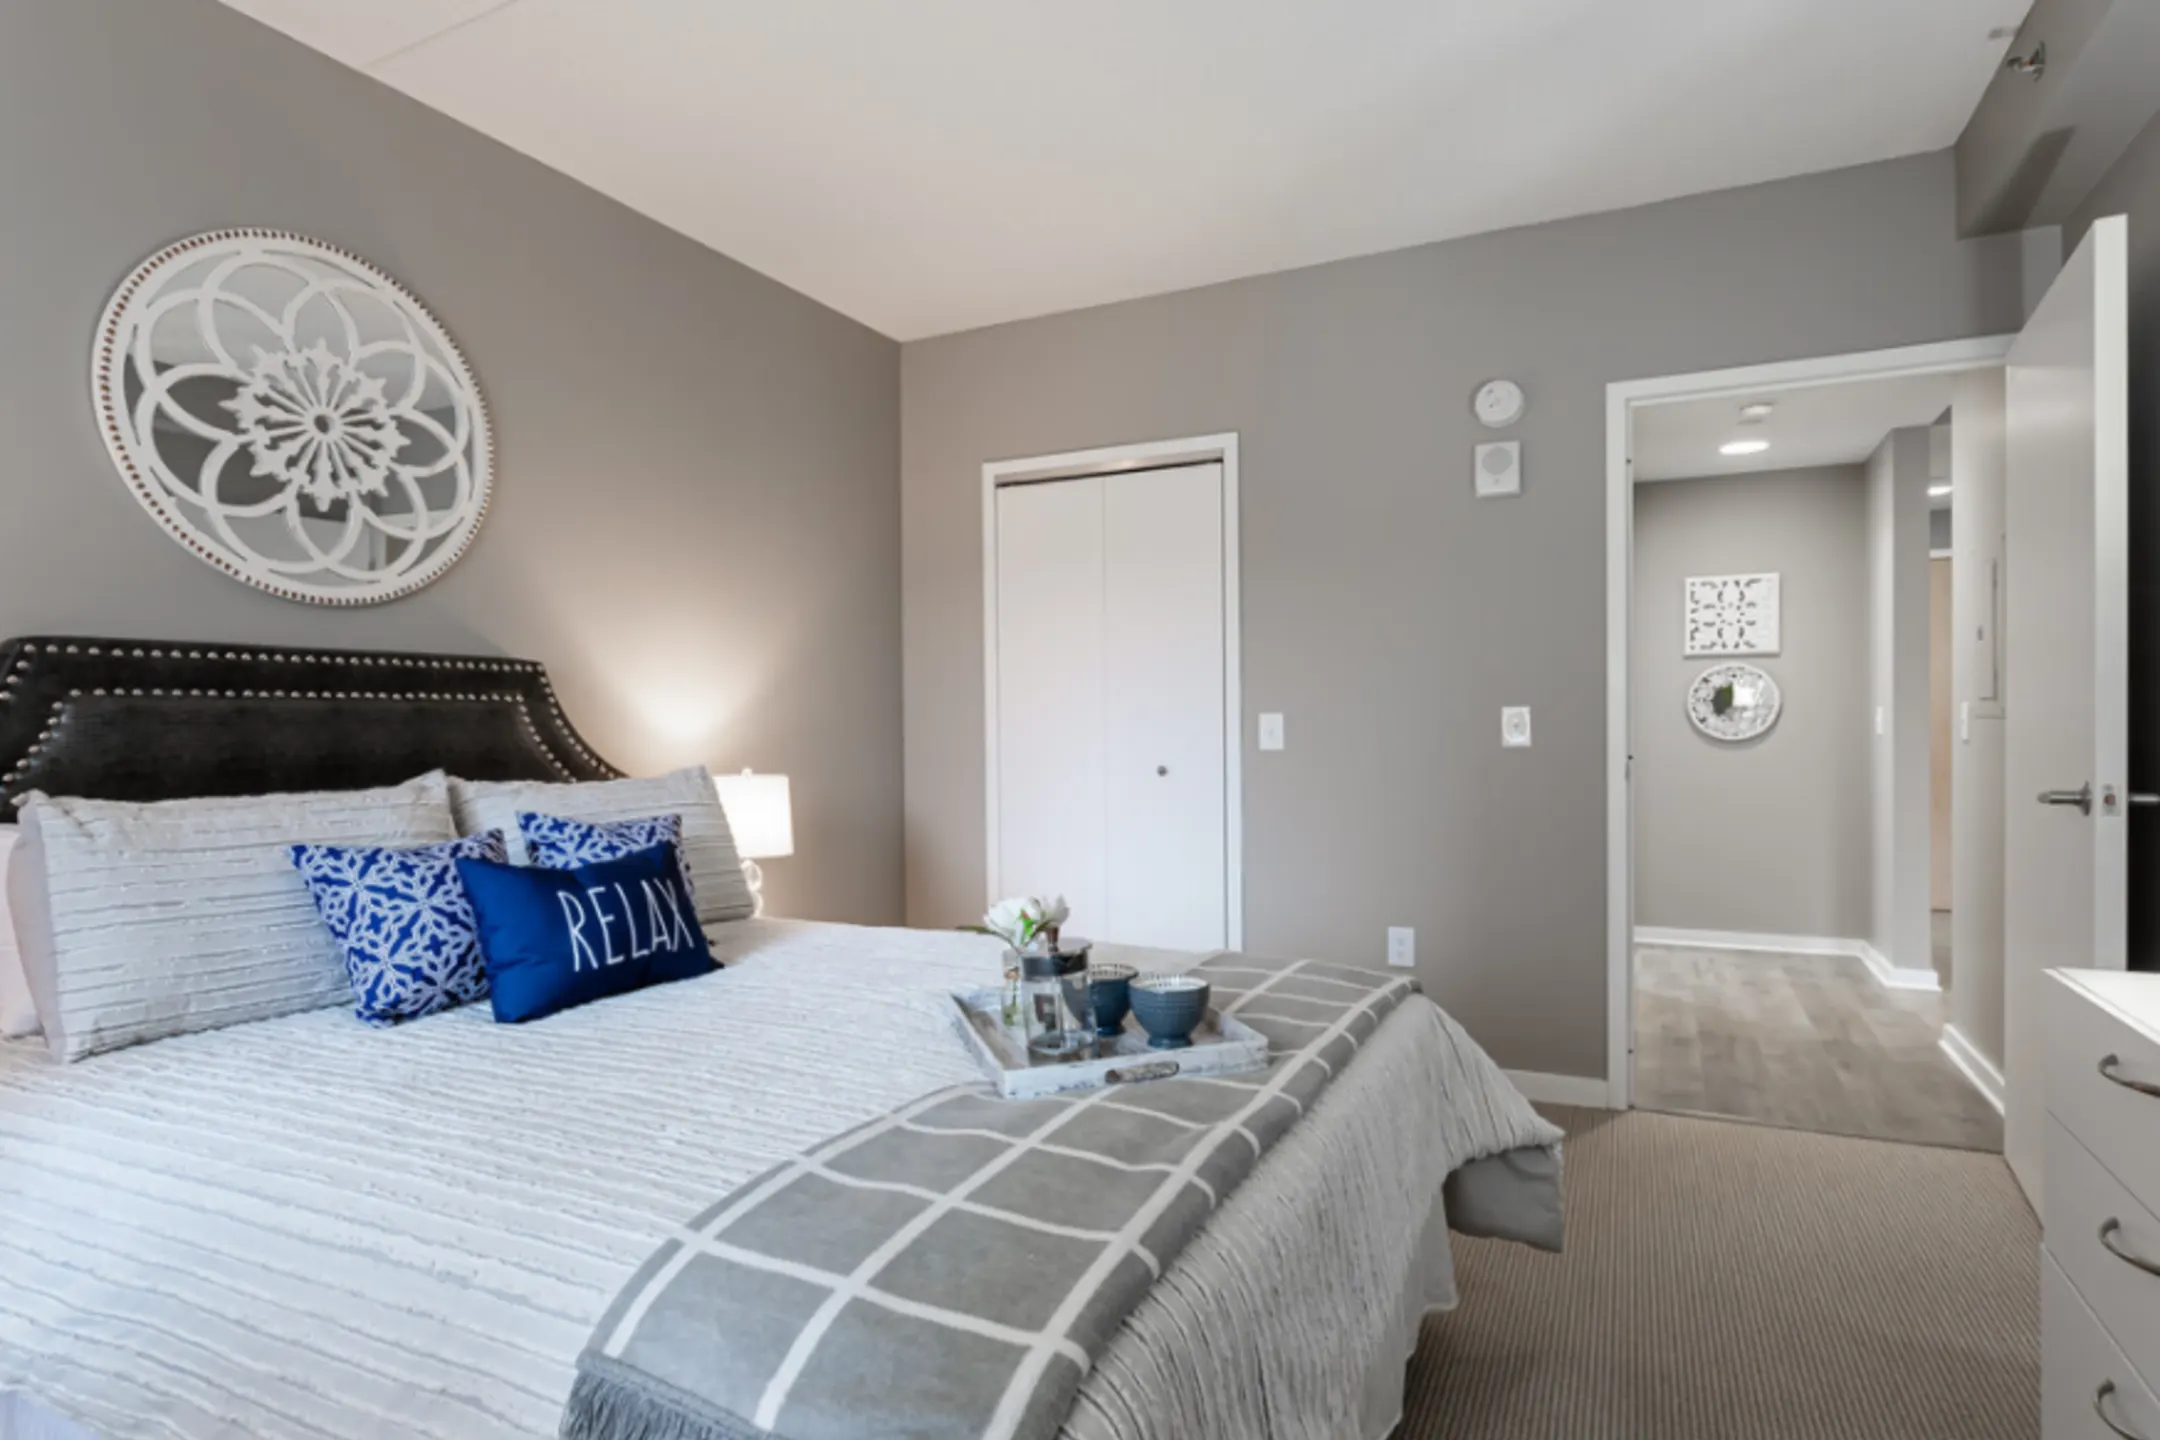 Bedroom - Spectra Park Apartments - Hartford, CT